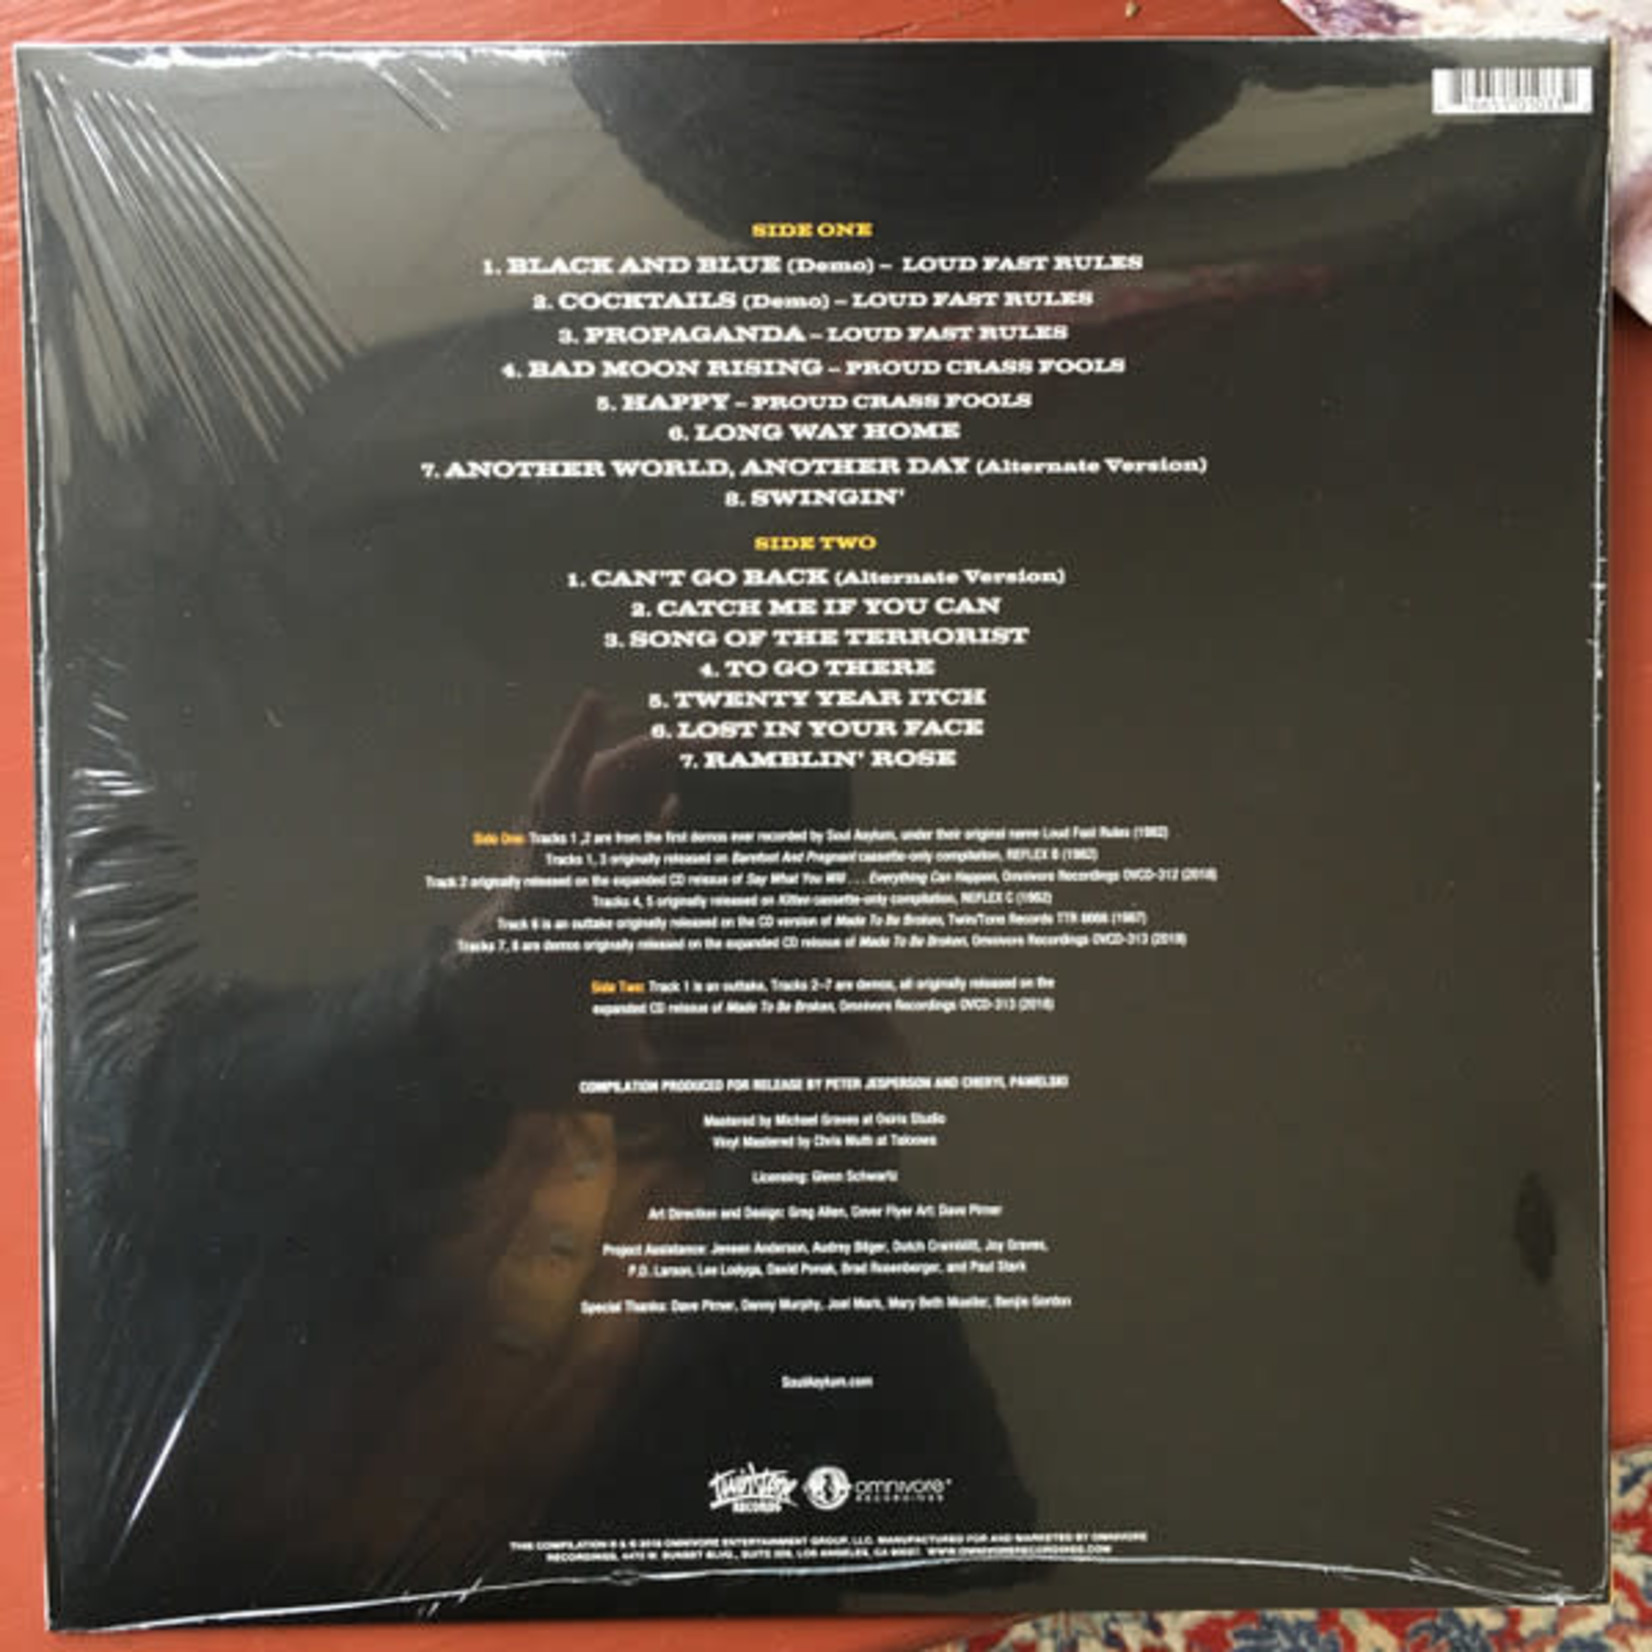 Omnivore Soul Asylum - Twin/Tone Extras (LP)